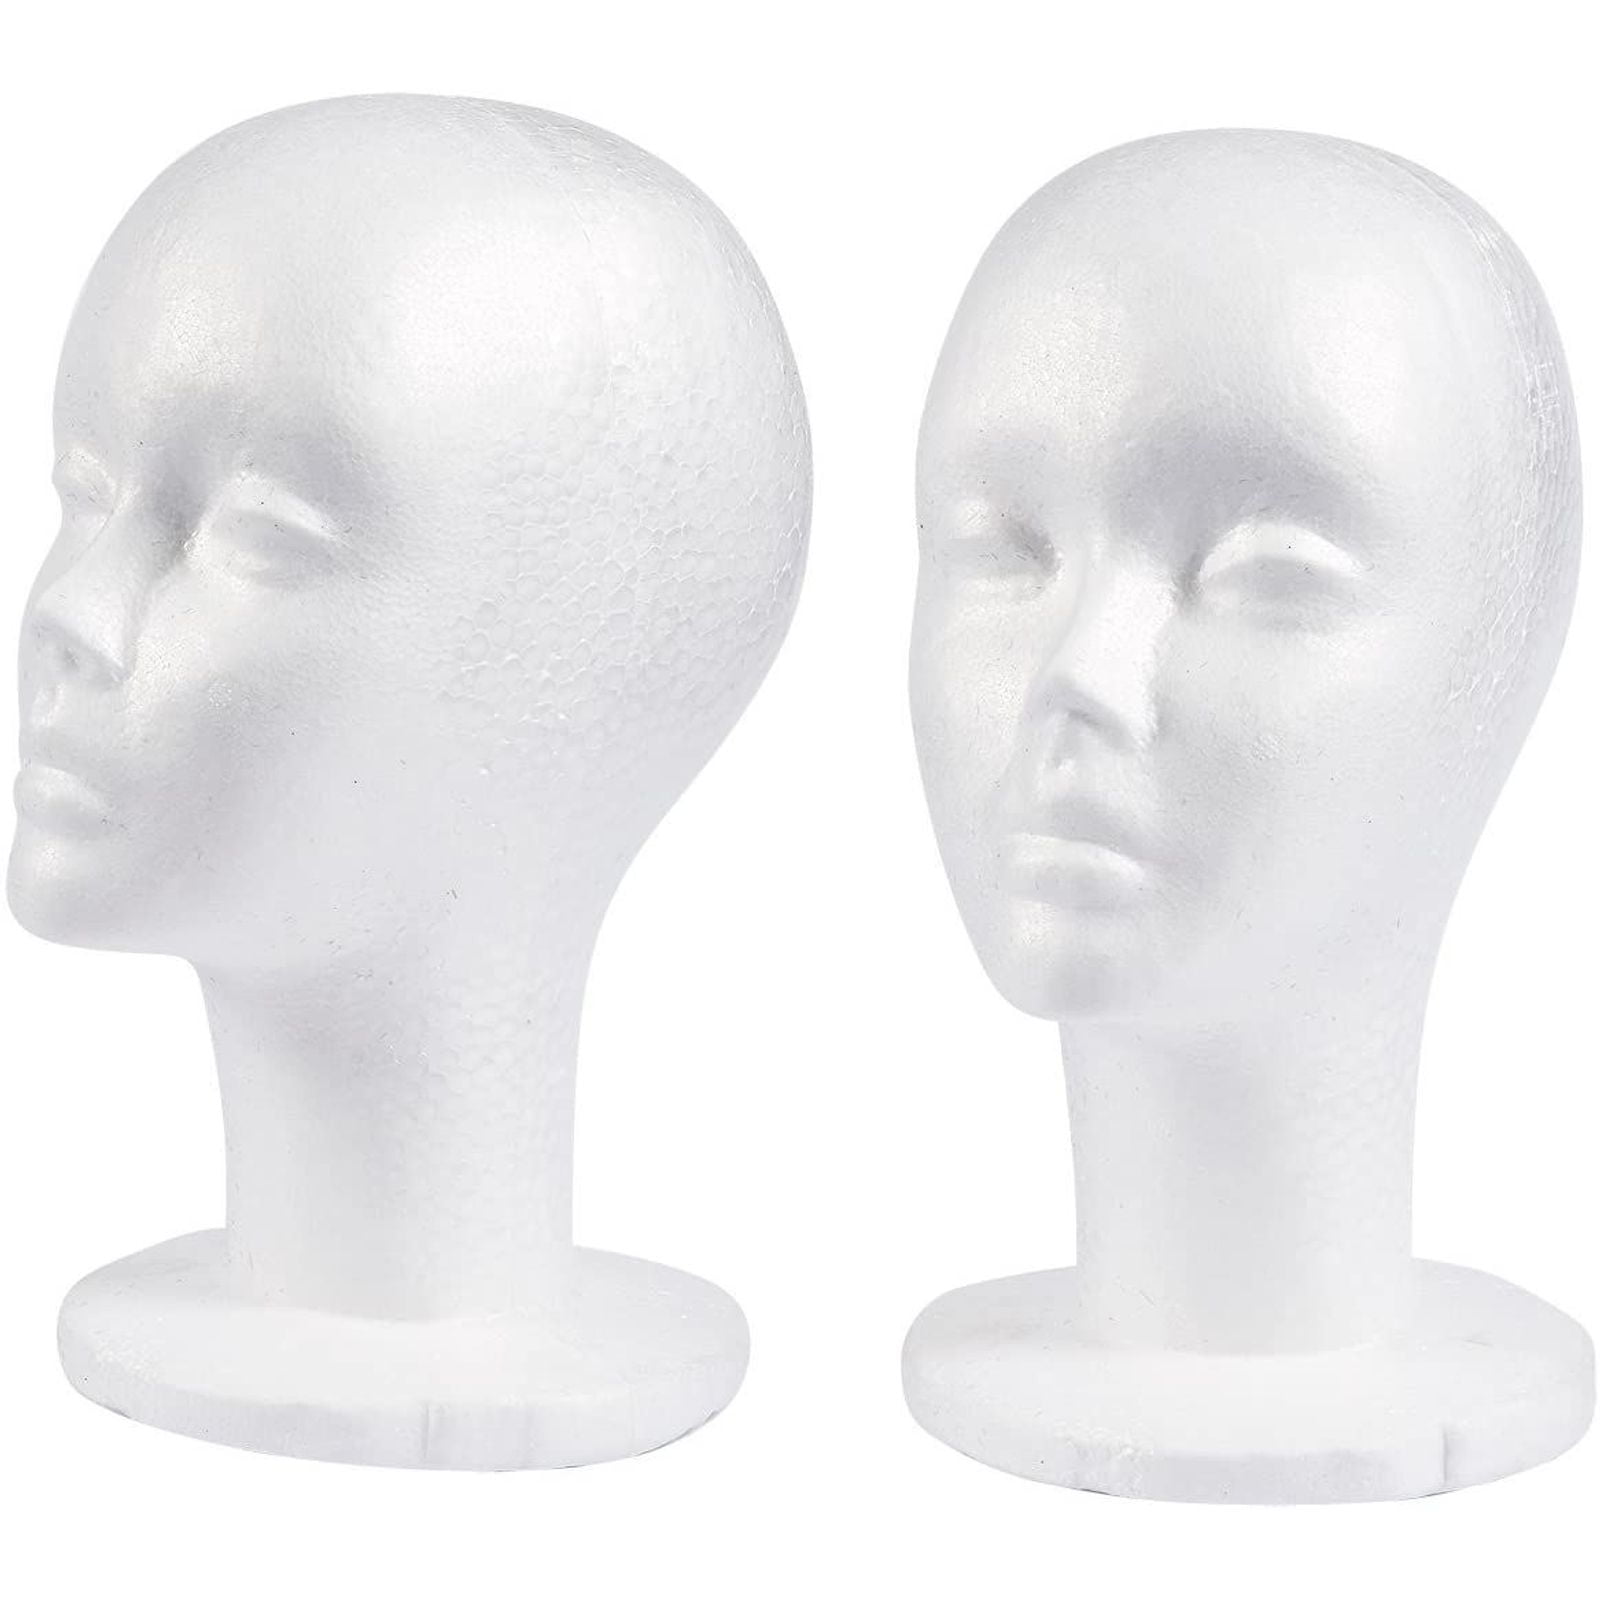 For Wig Glasses Male Head Model Foam Displays Manikin Torso Dummy Accessory 